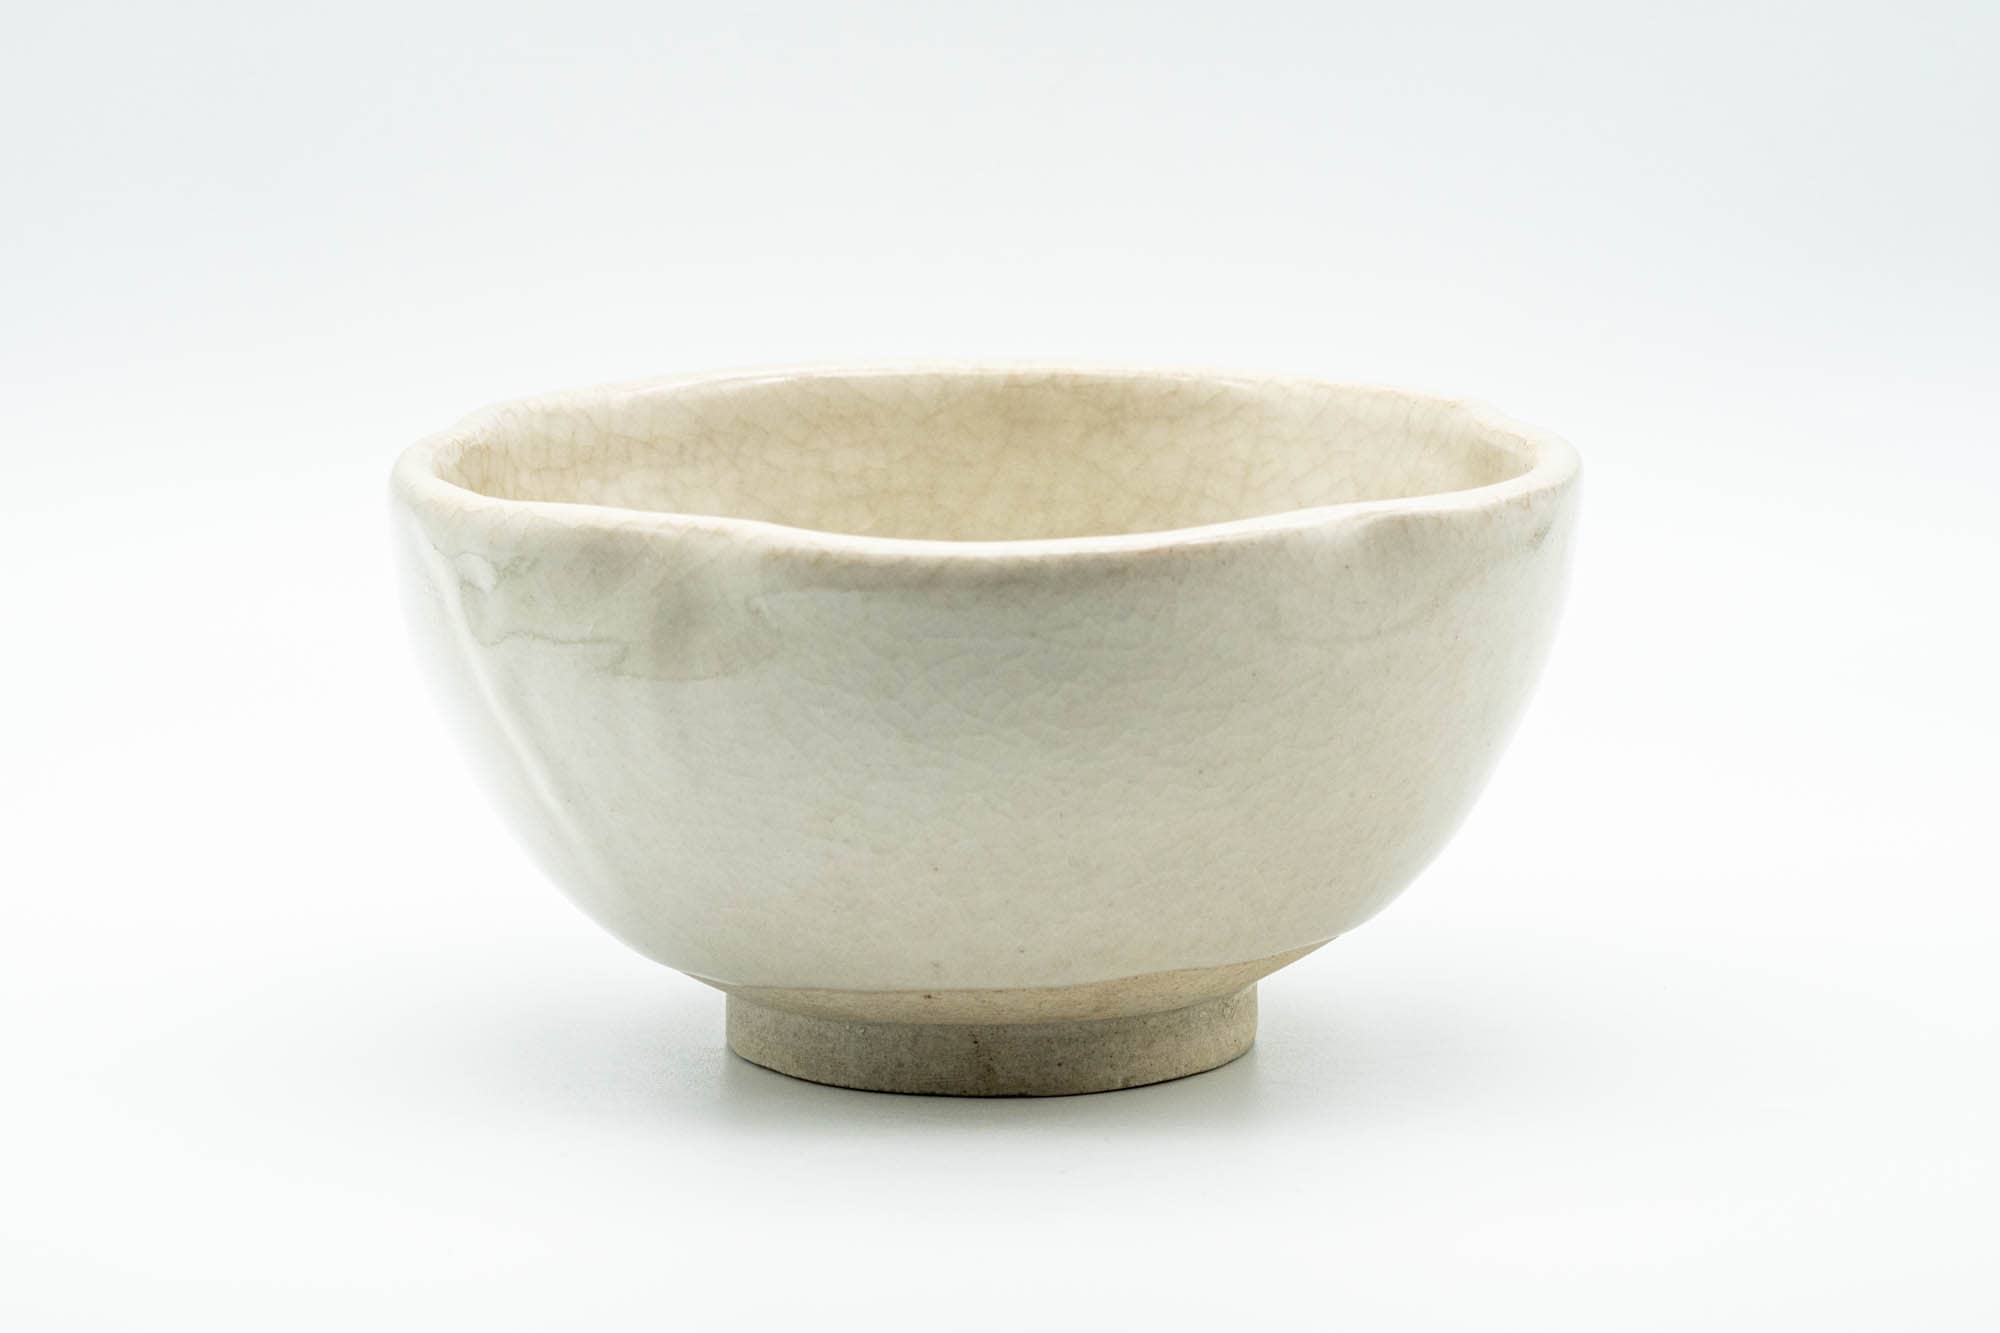 Japanese Matcha Bowl - Milky White Glazed Plum Blossom-shaped Chawan - 300ml